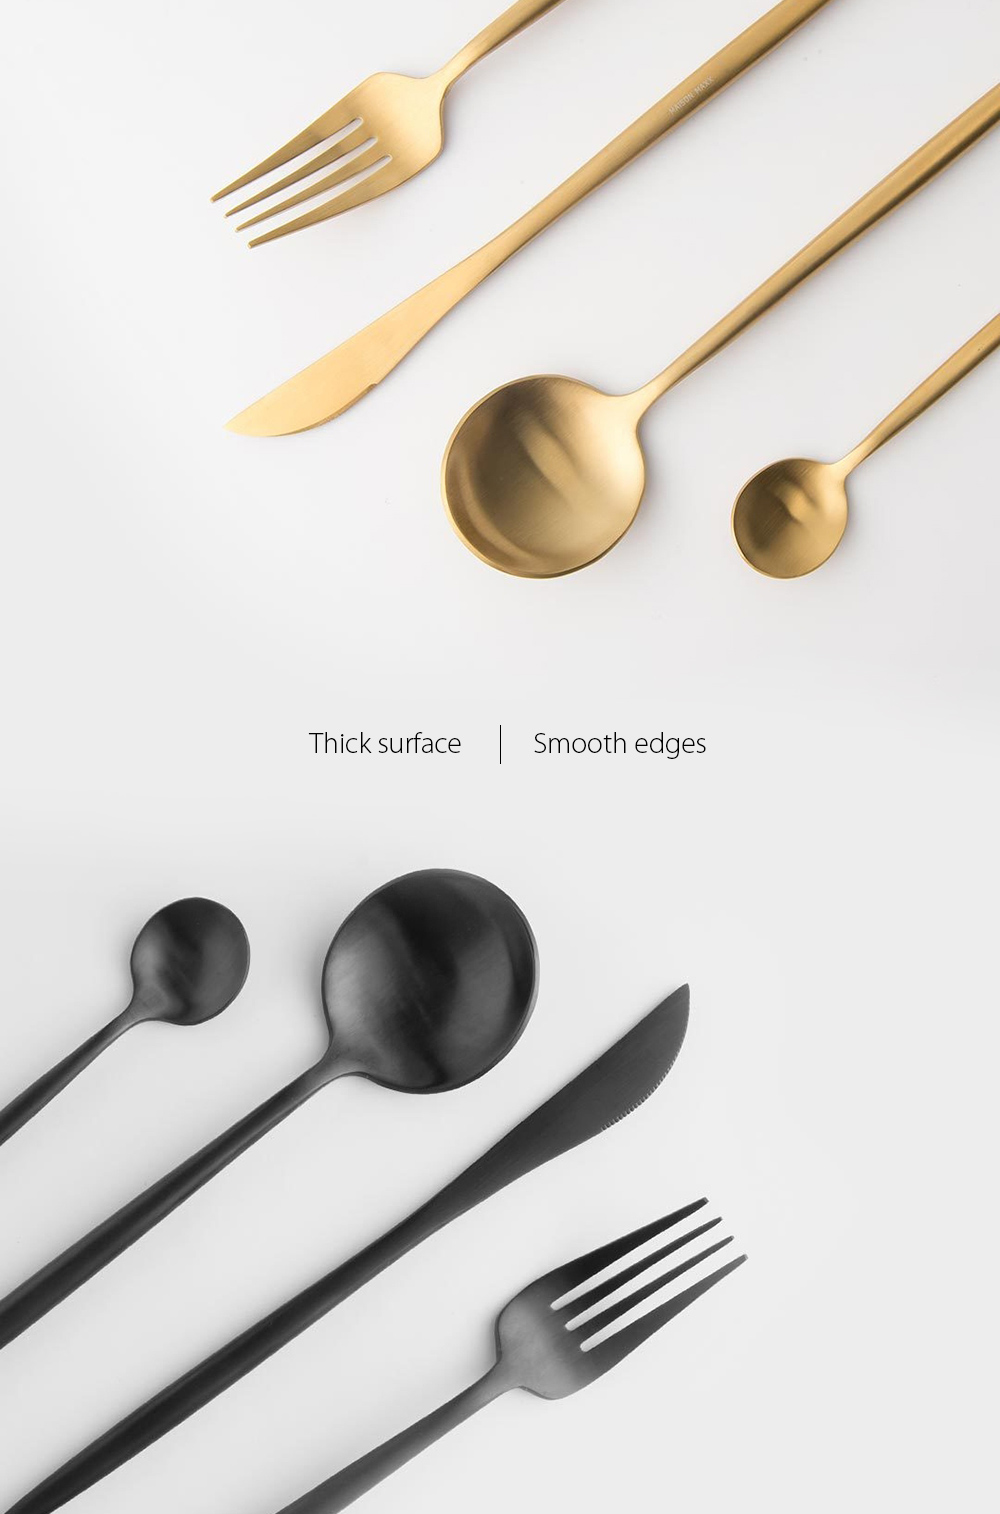 Xiaomi Youpin MAISON MAXX Cutlery Stainless Steel Flatware Set Kitchen Polished Utensils Including Knife Spoon Fork Teaspoon Tableware